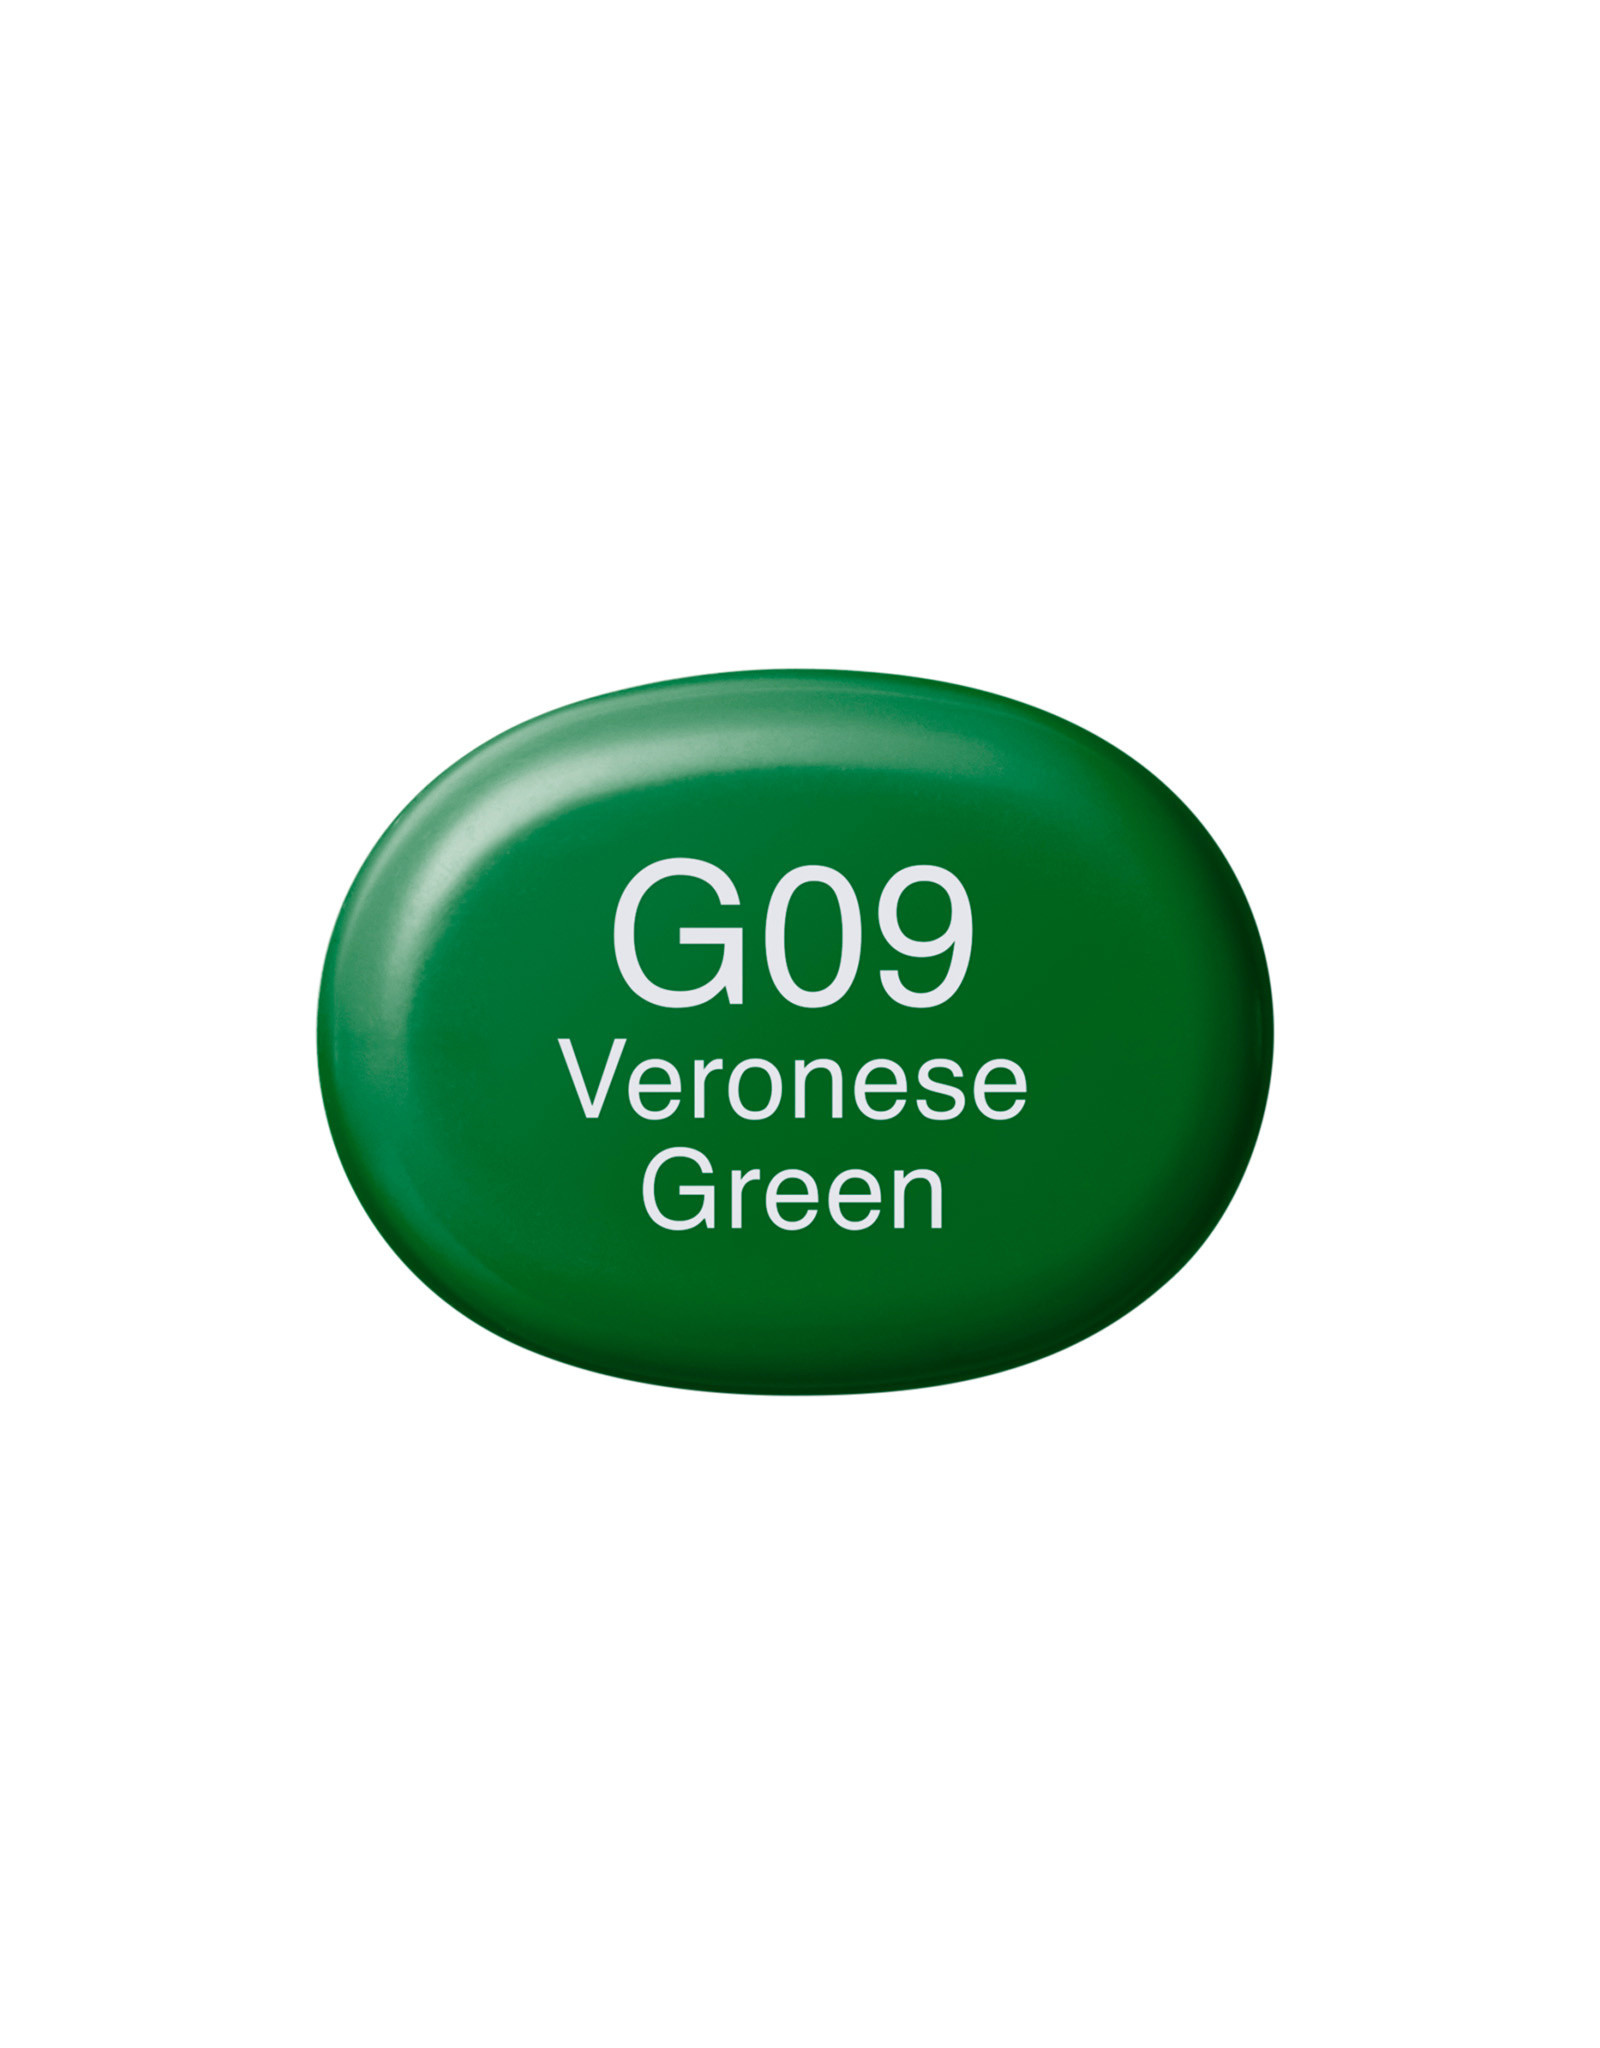 COPIC COPIC Sketch Marker G09 Veronese Green